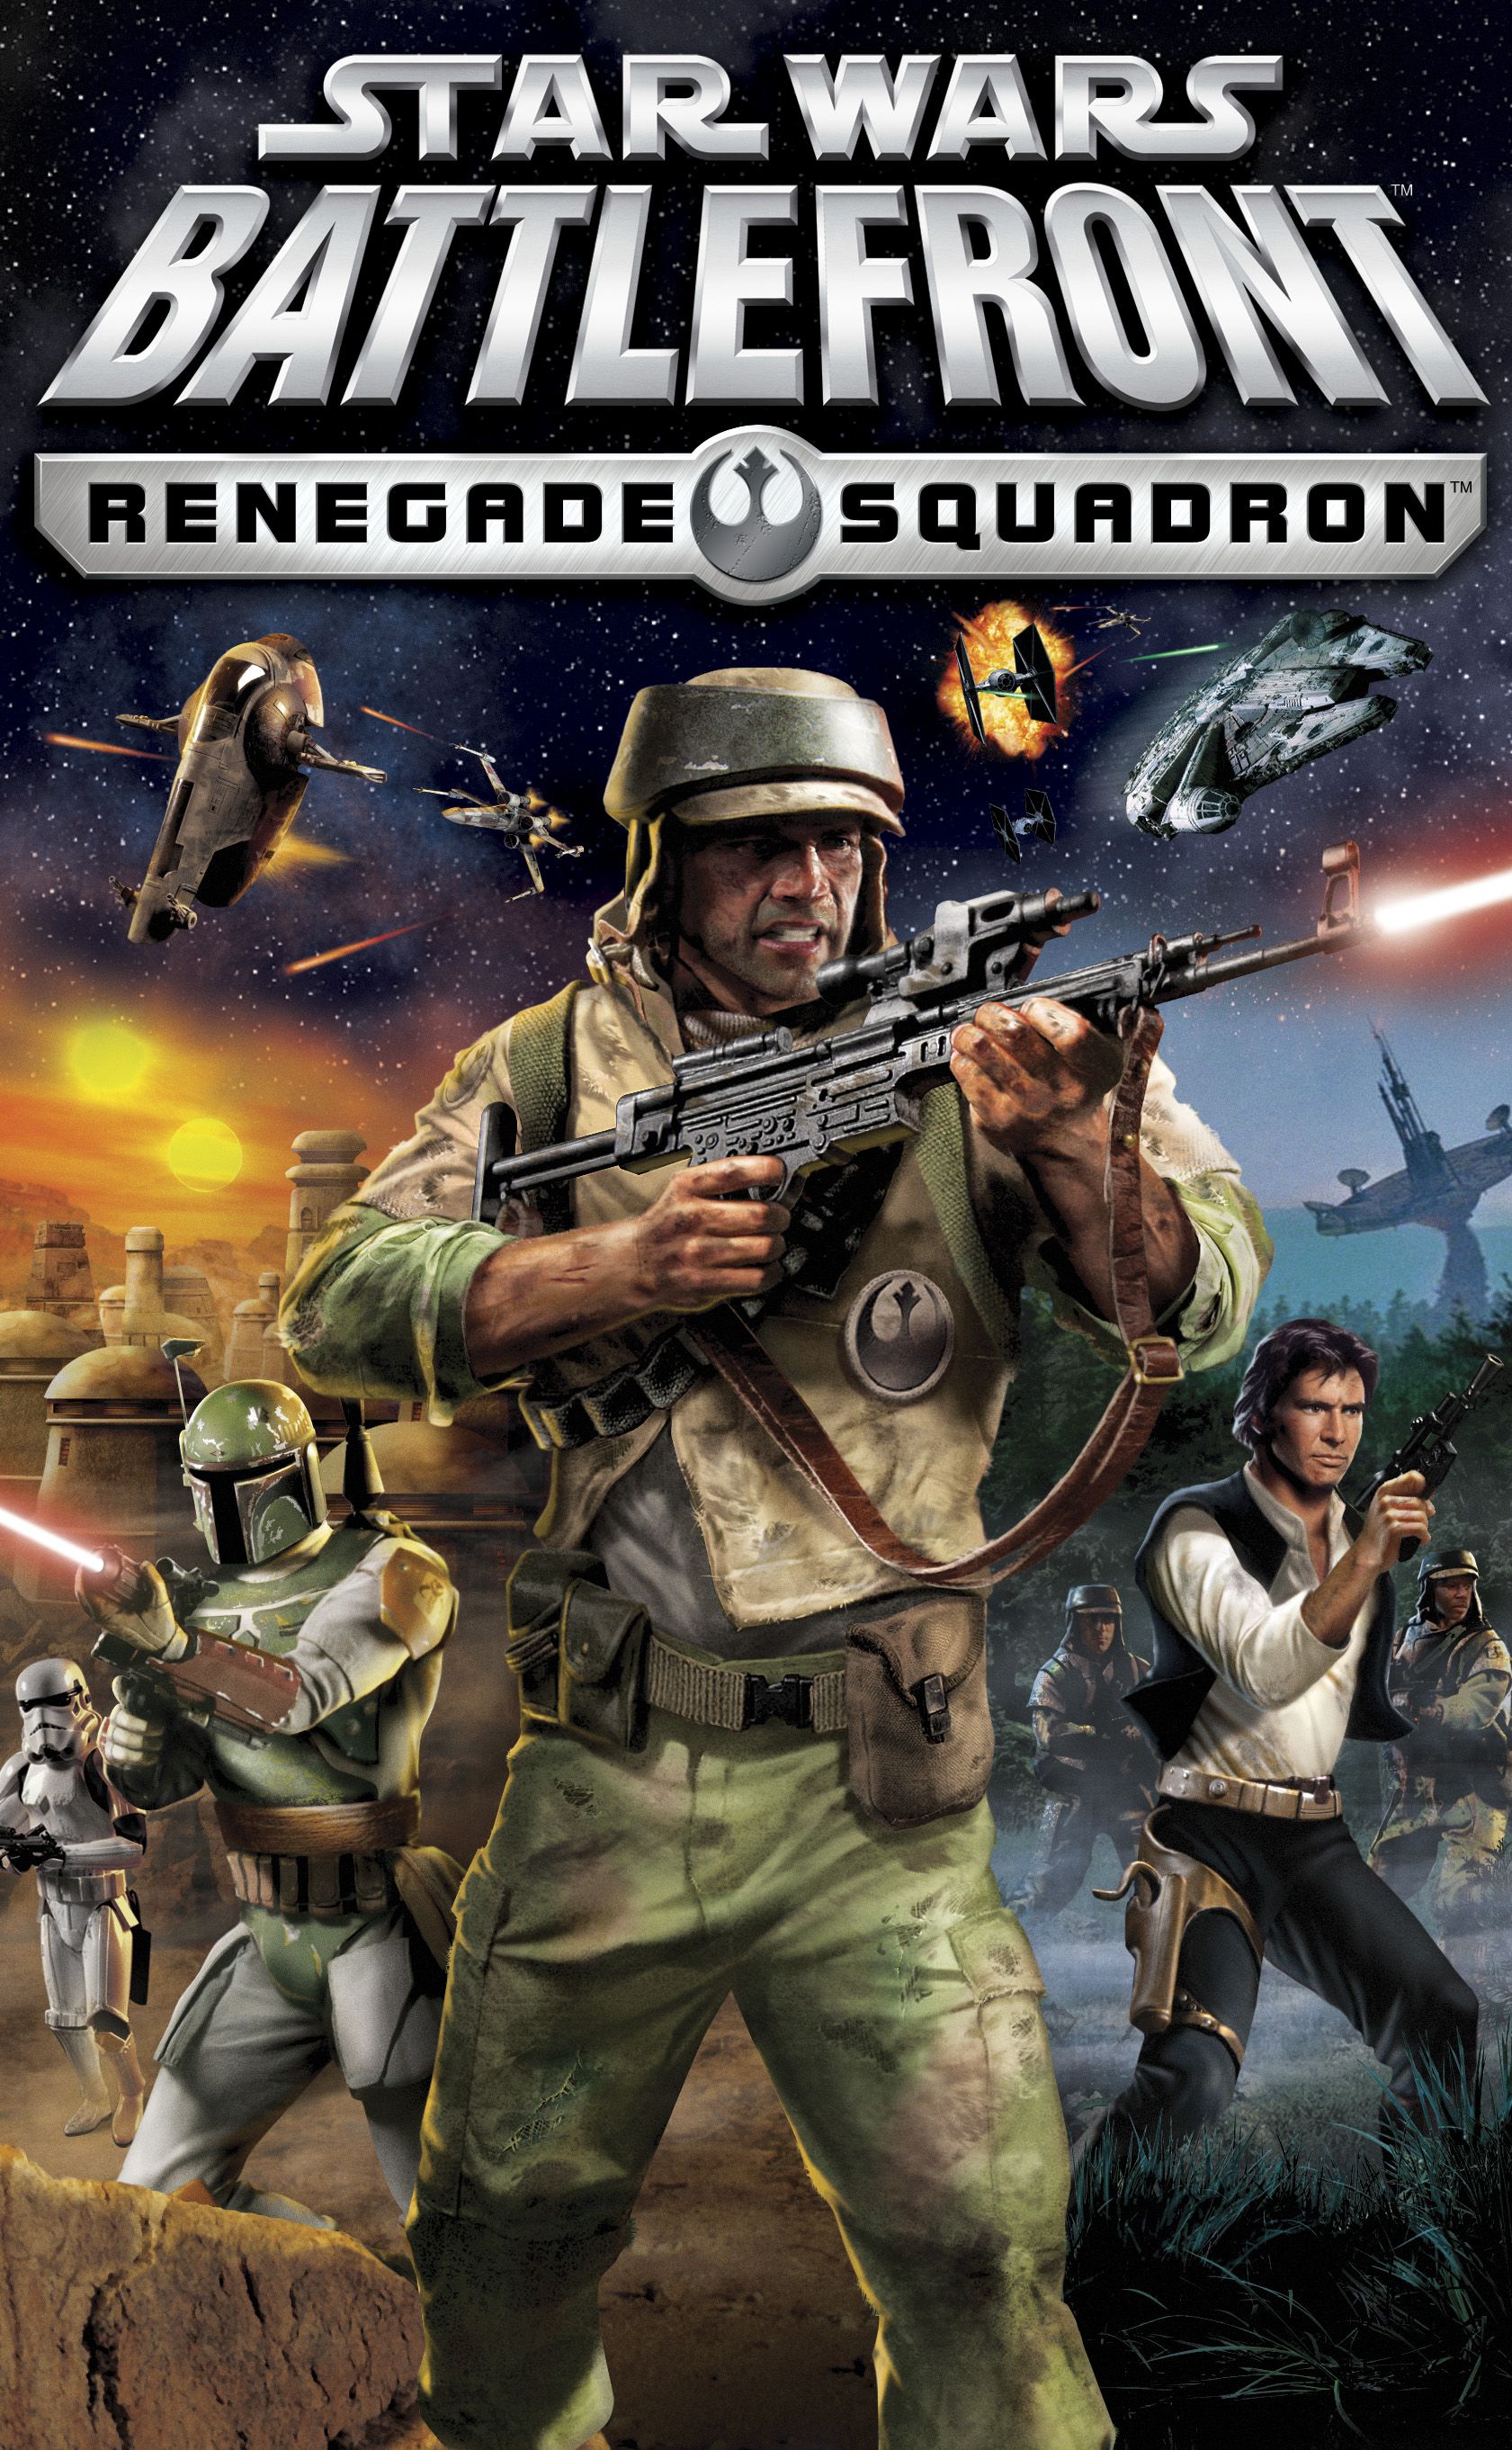 Star Wars Battlefront: Renegade Squadron. Star wars battlefront, Star wars games, Star wars